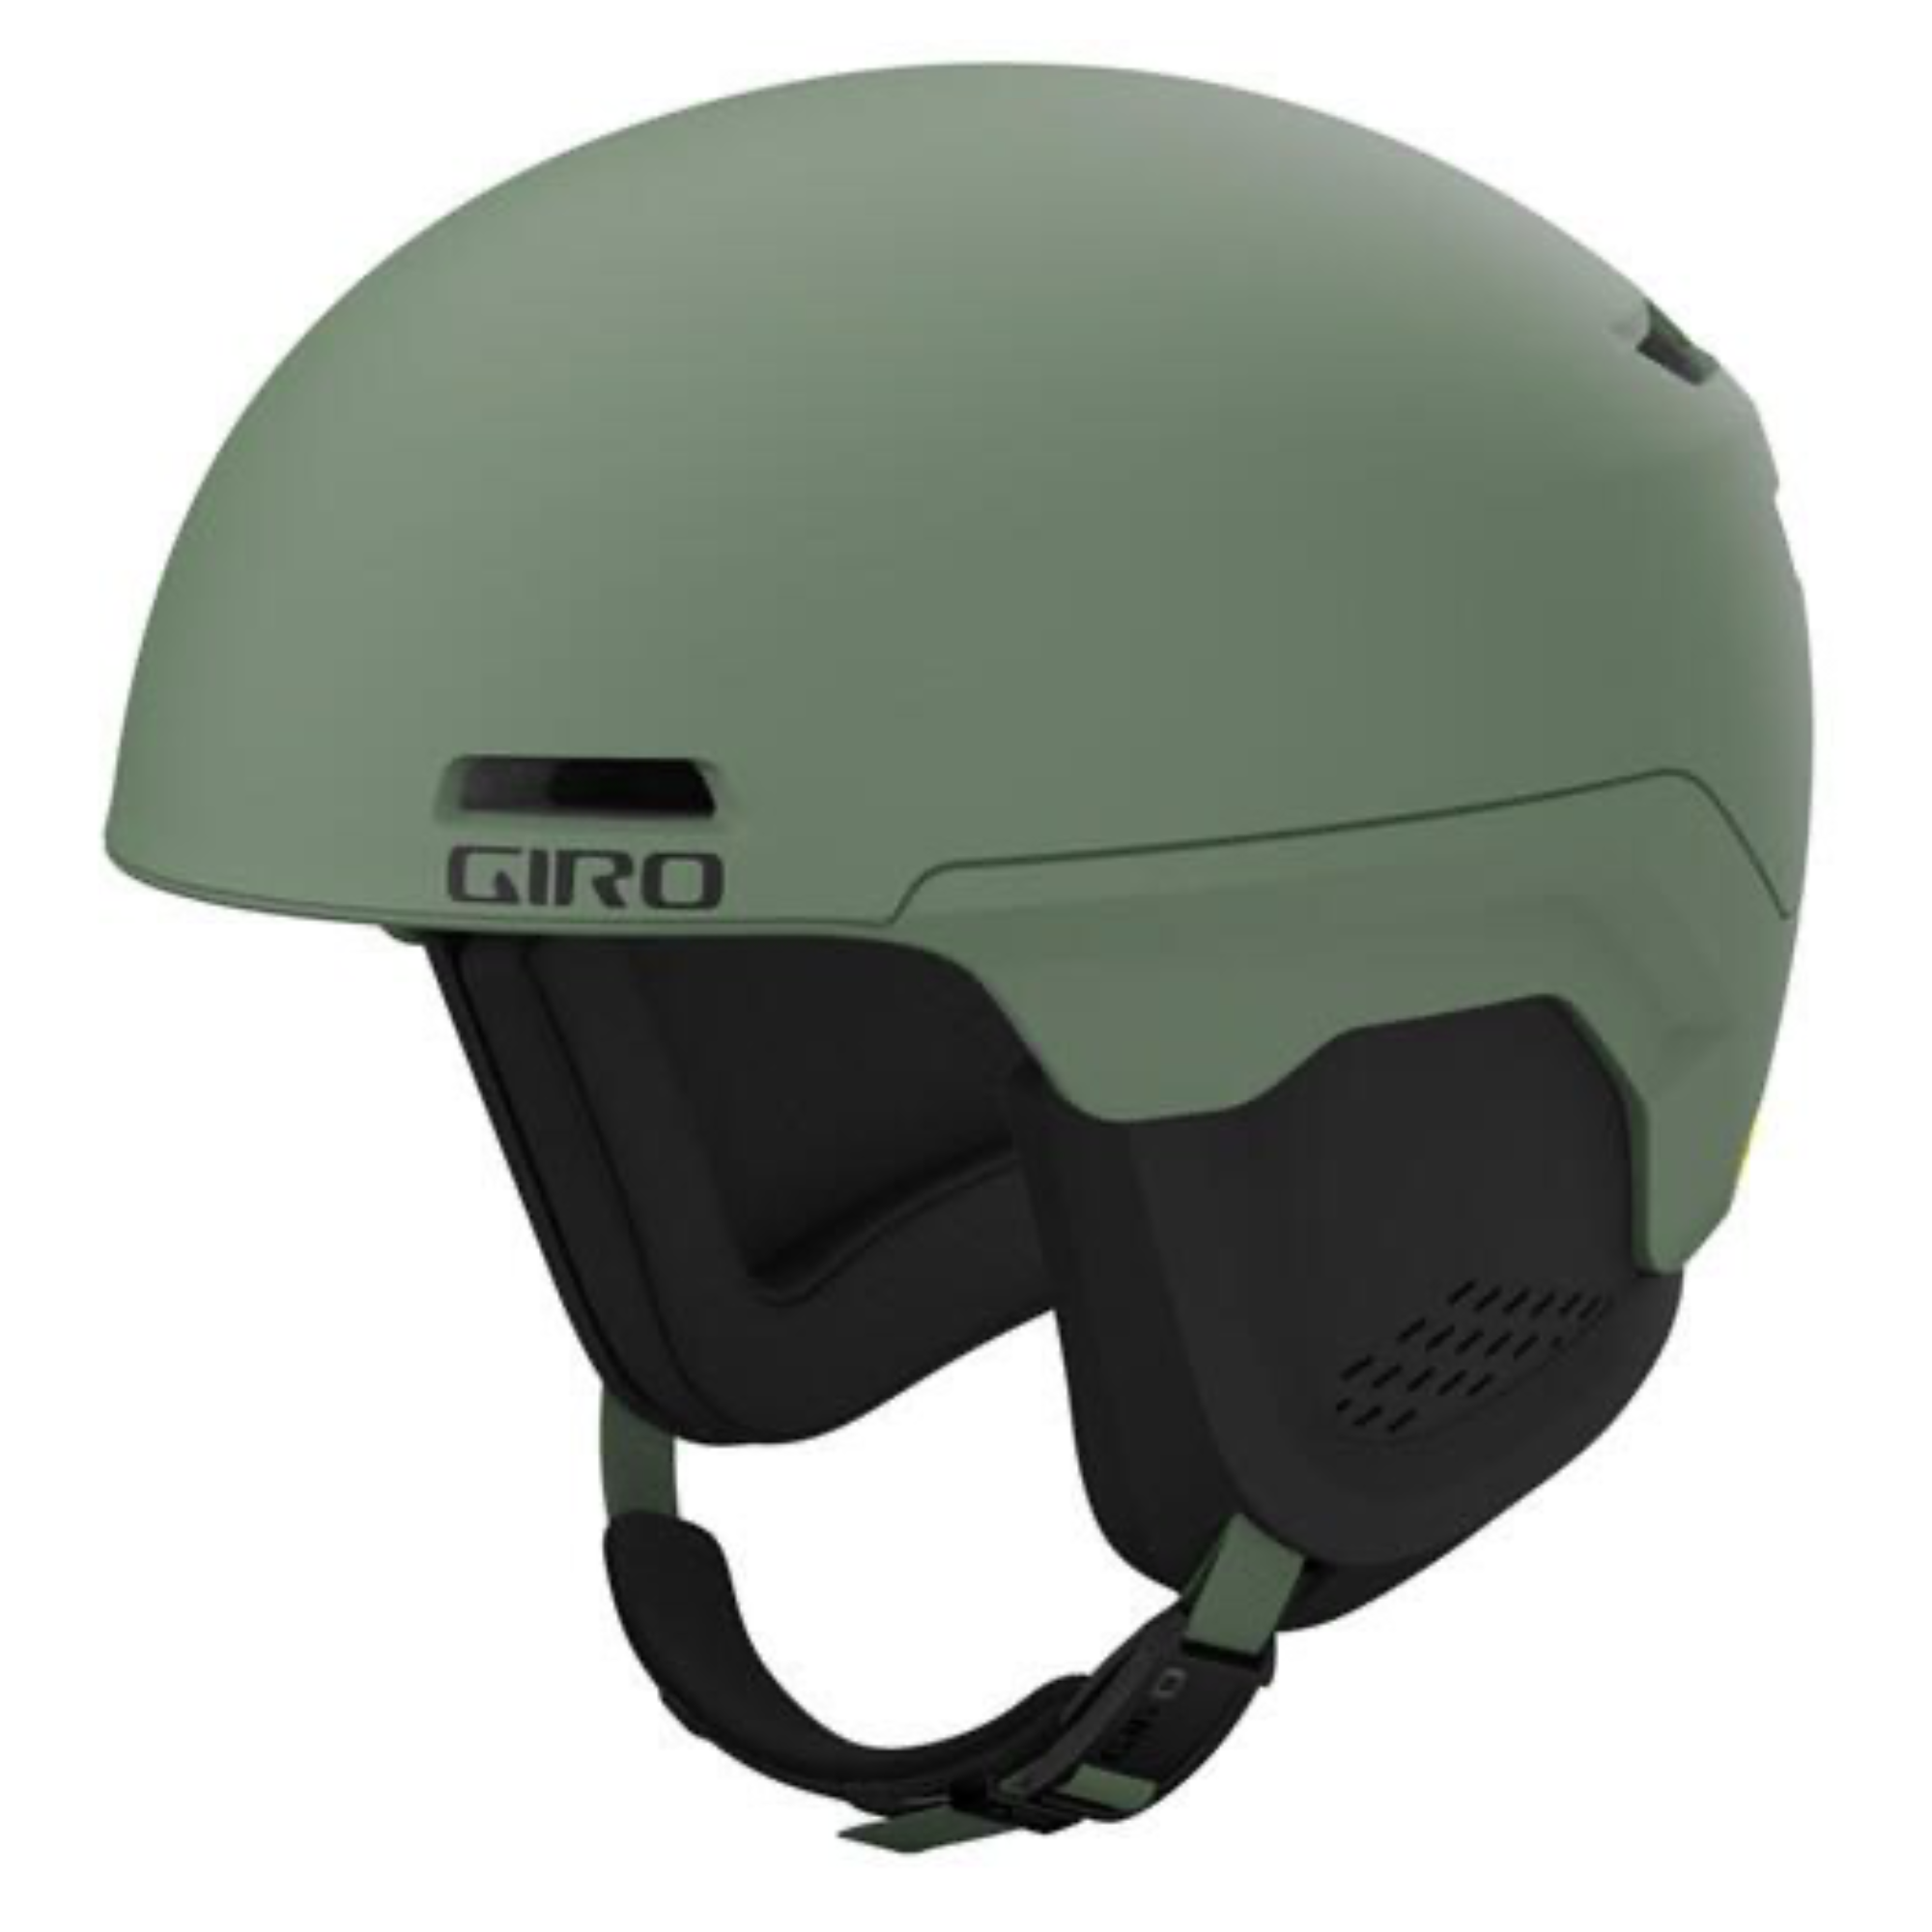 Giro Owen Spherical Helmet - Hedge Green